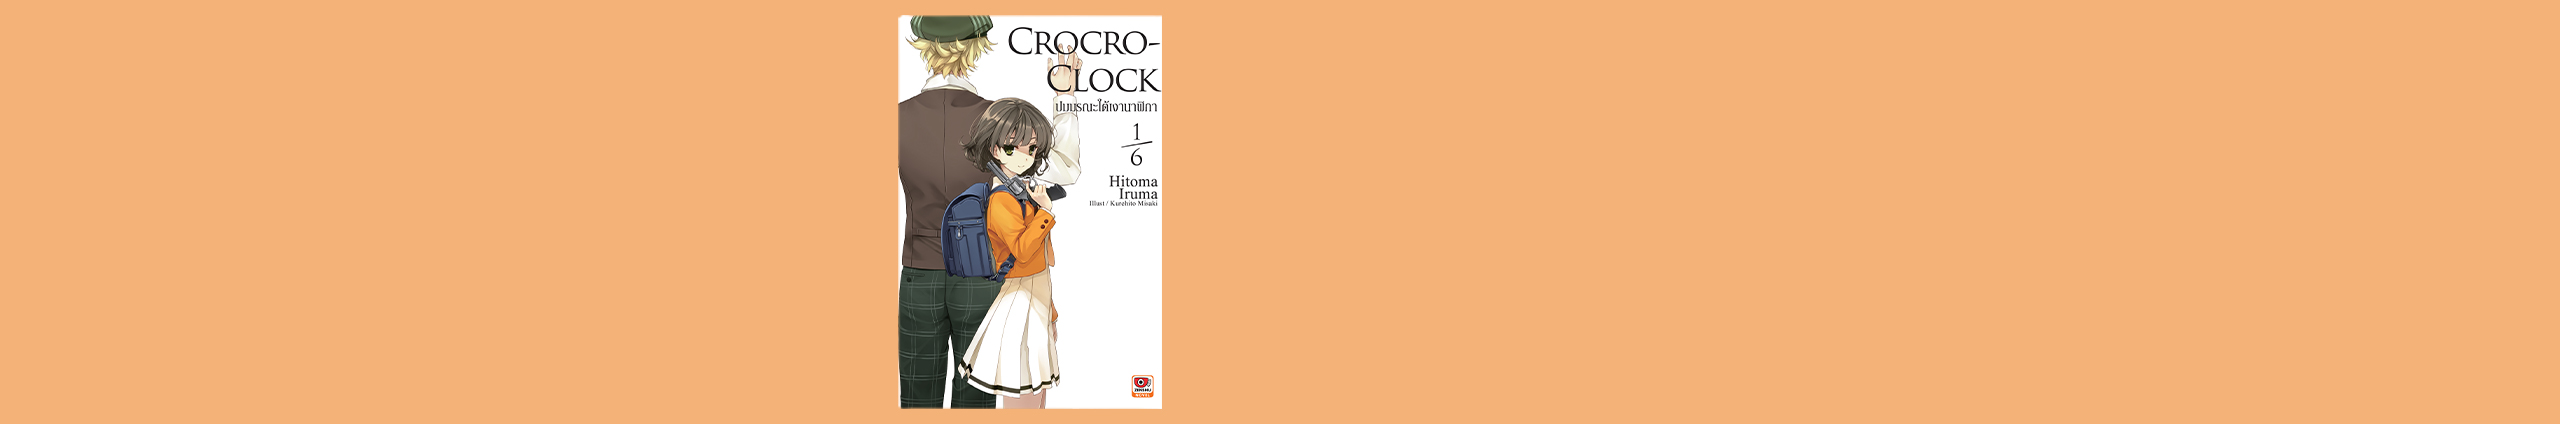 Crocro-Clock ปมมรณะใต้เงานาฬิกา